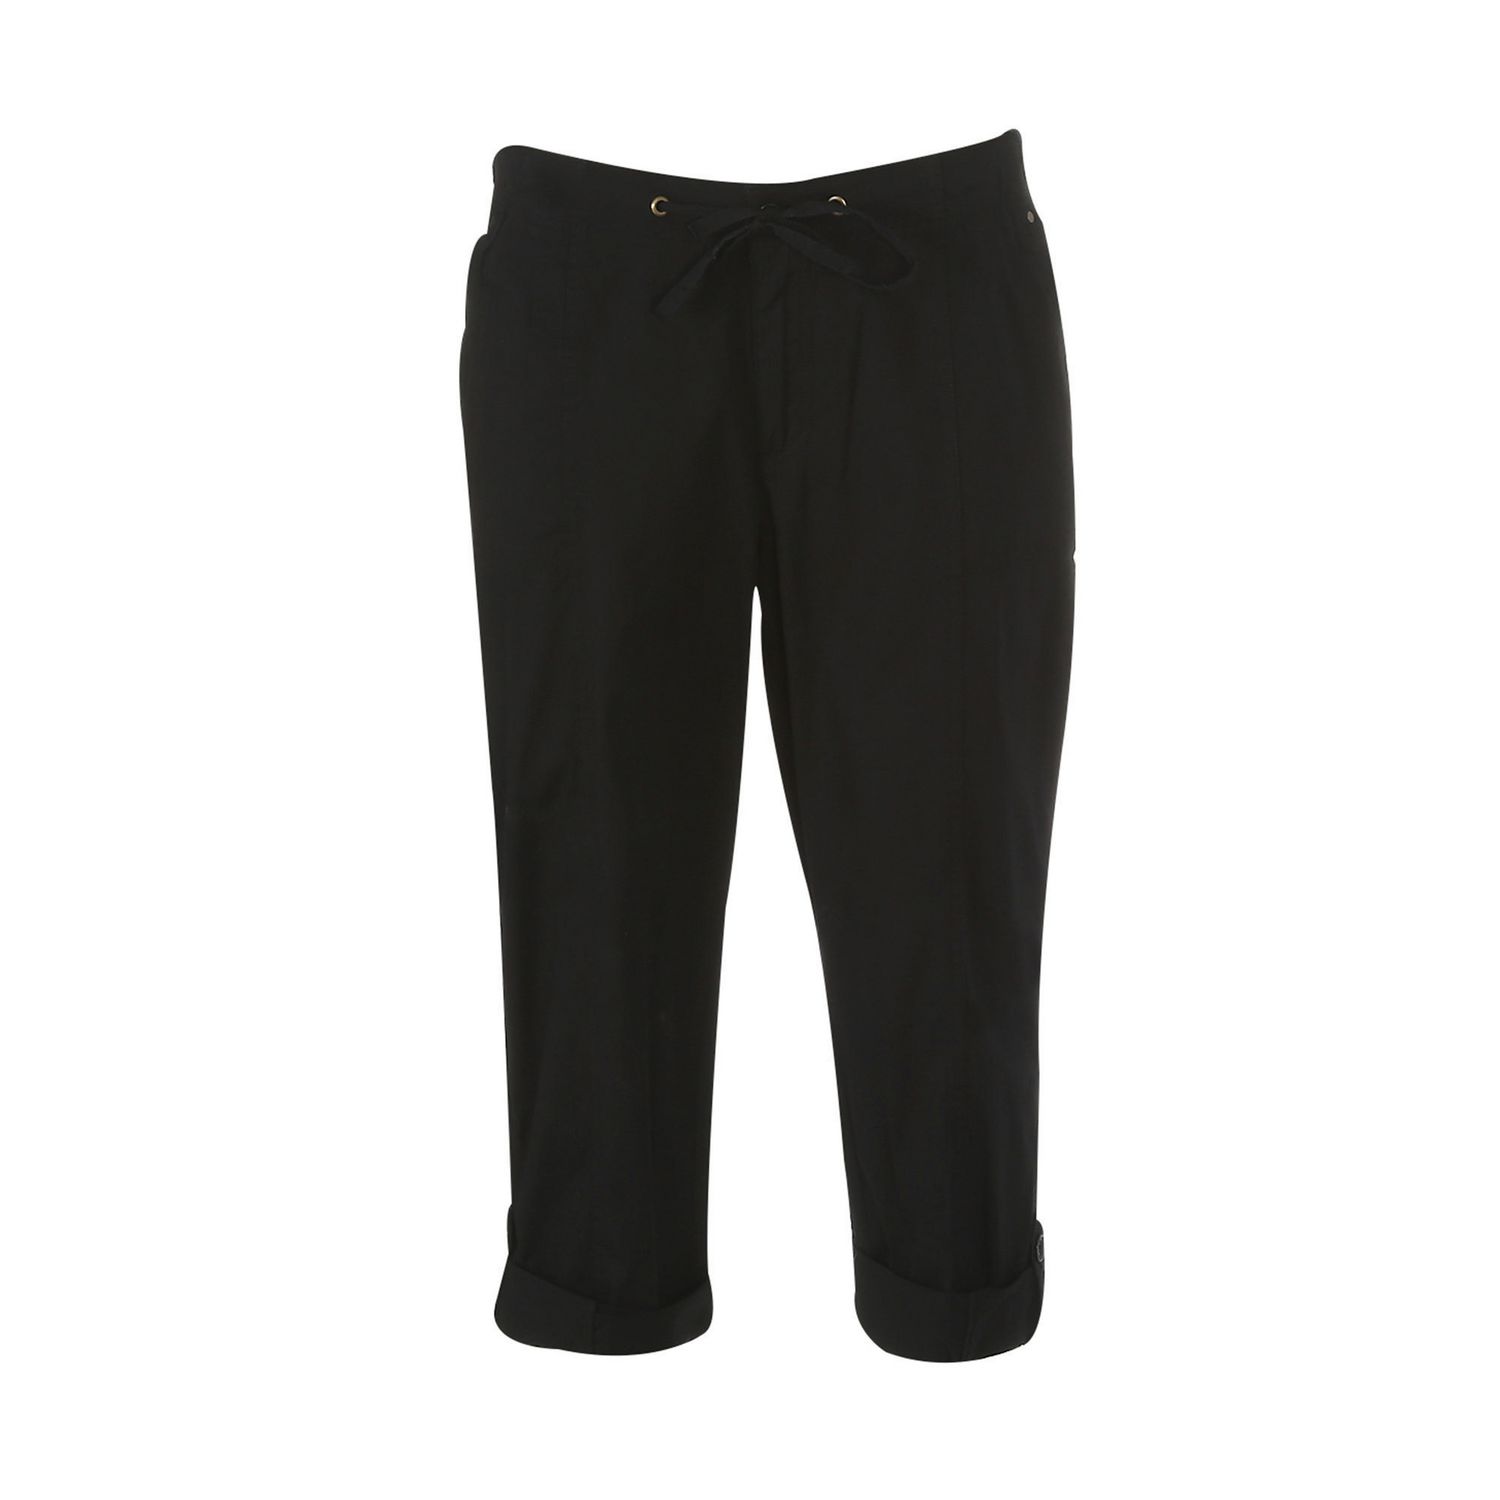 Buy Columbia women regular stretchable plain capri pants black Online